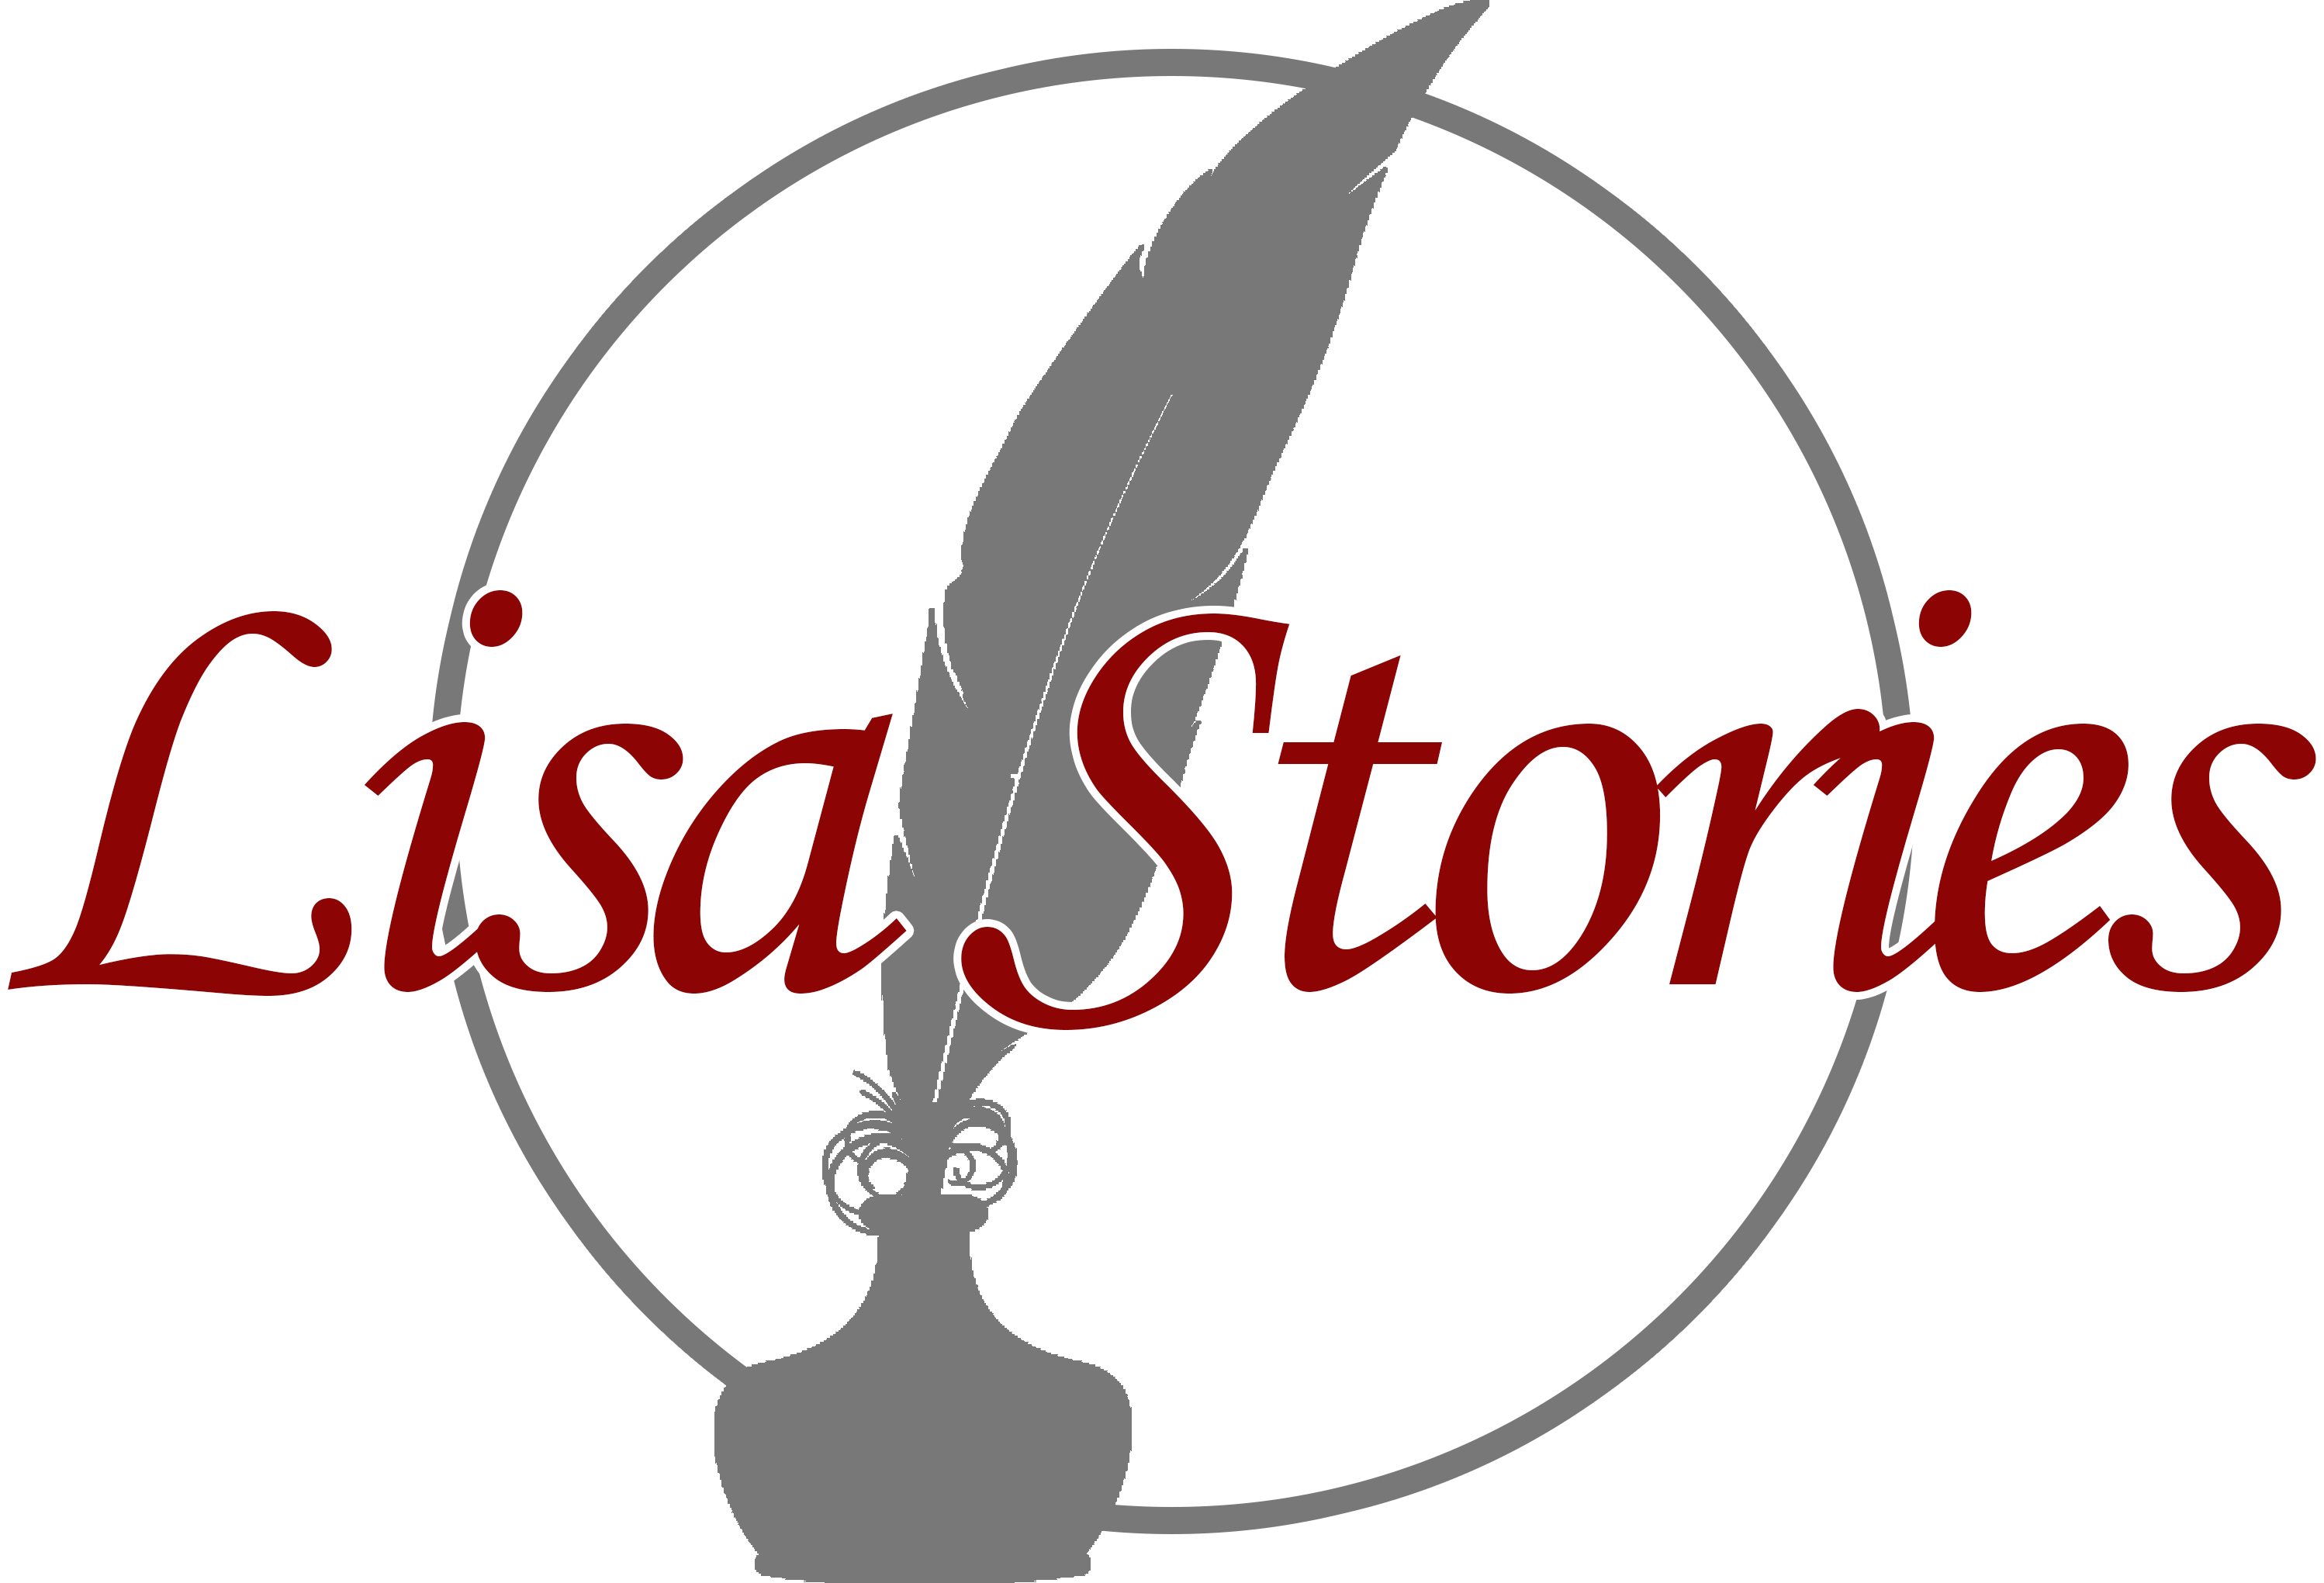 Lisa Stories